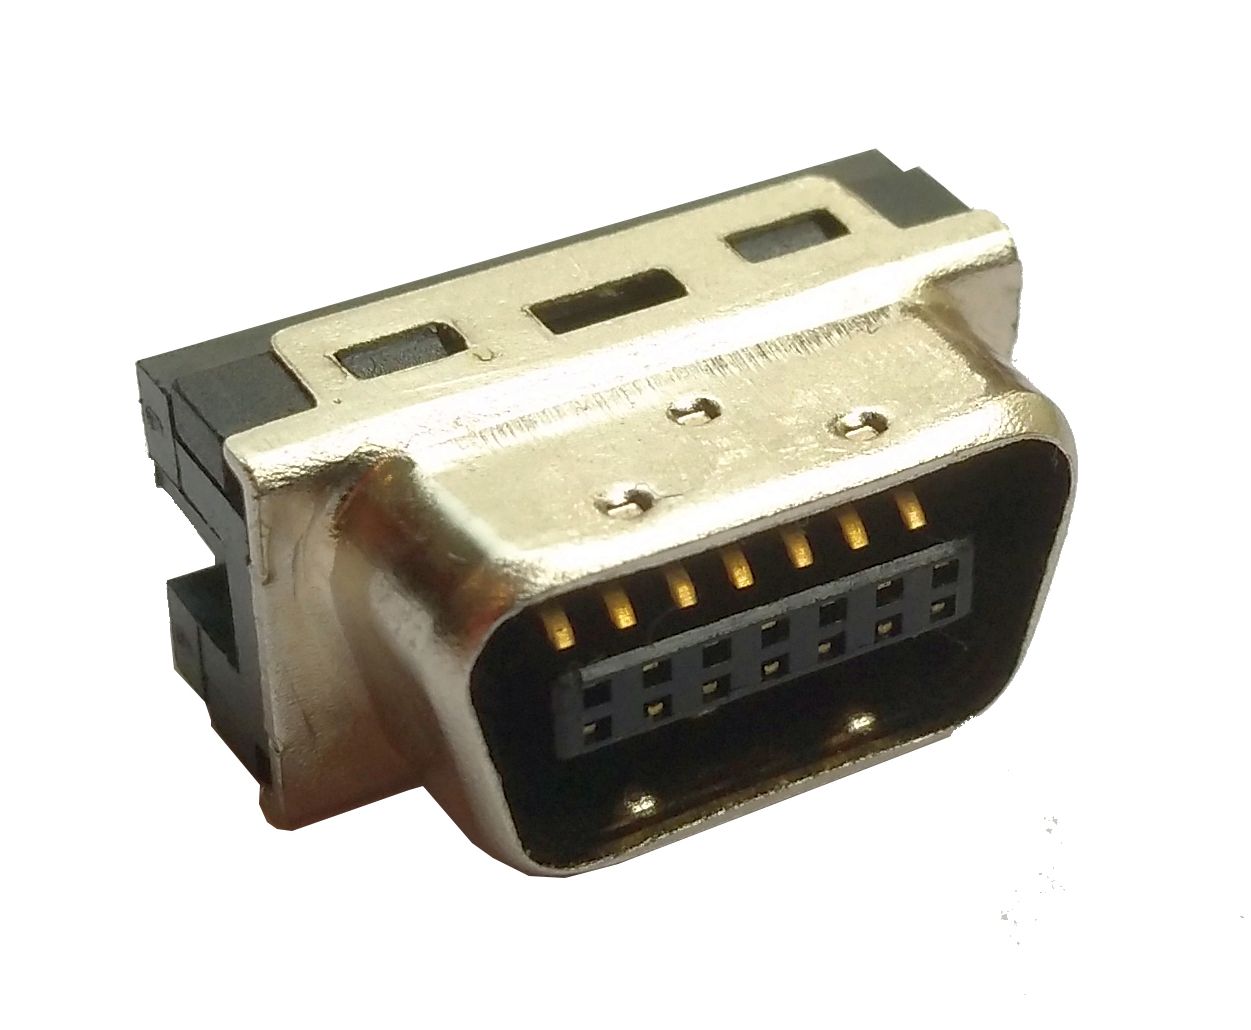 Centronics 14-pin connector met behuizing male voorkant schuin connector